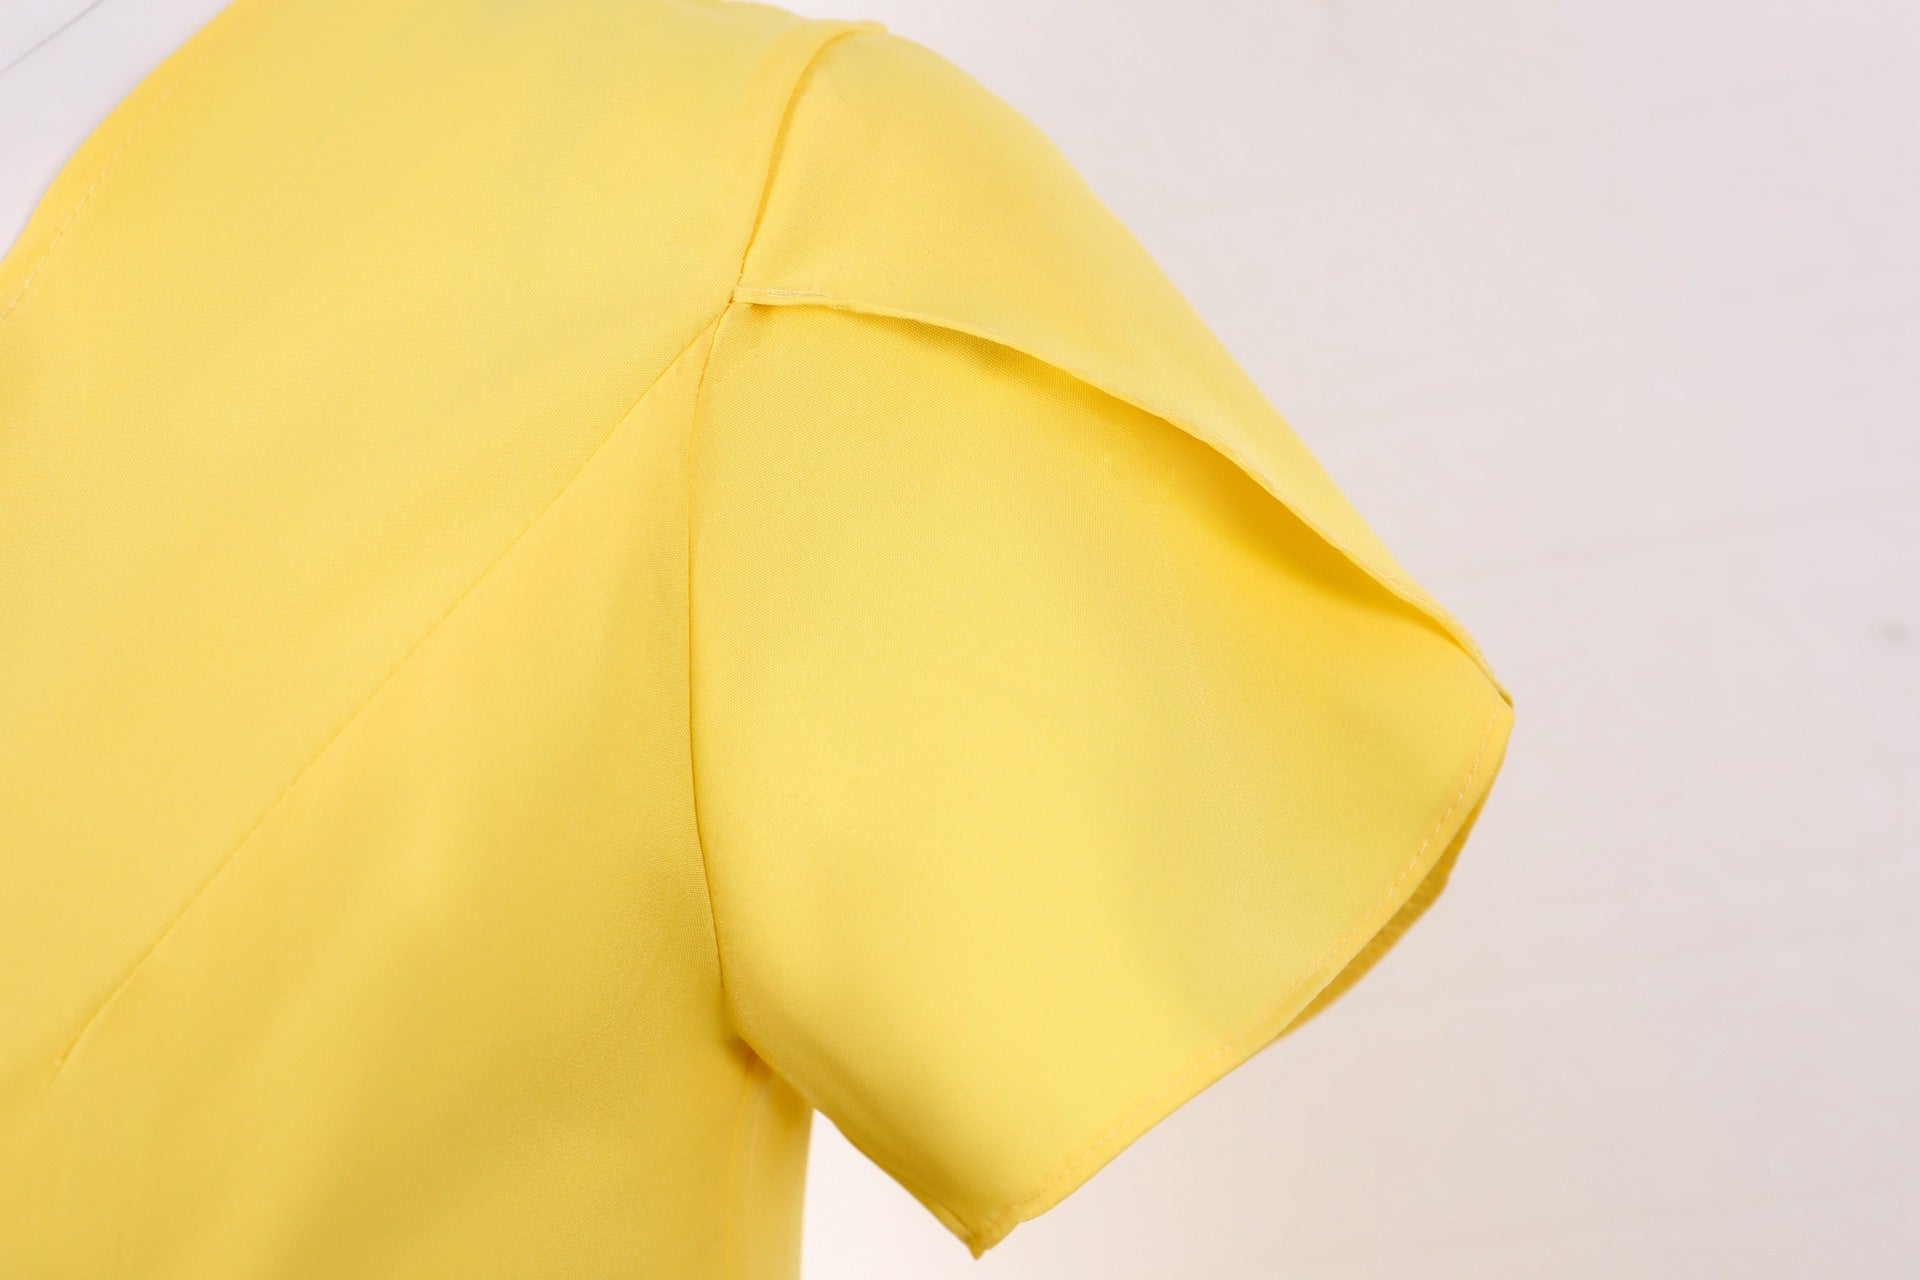 Vintage Short Sleeves Women Dresses-Yellow-S-Free Shipping Leatheretro